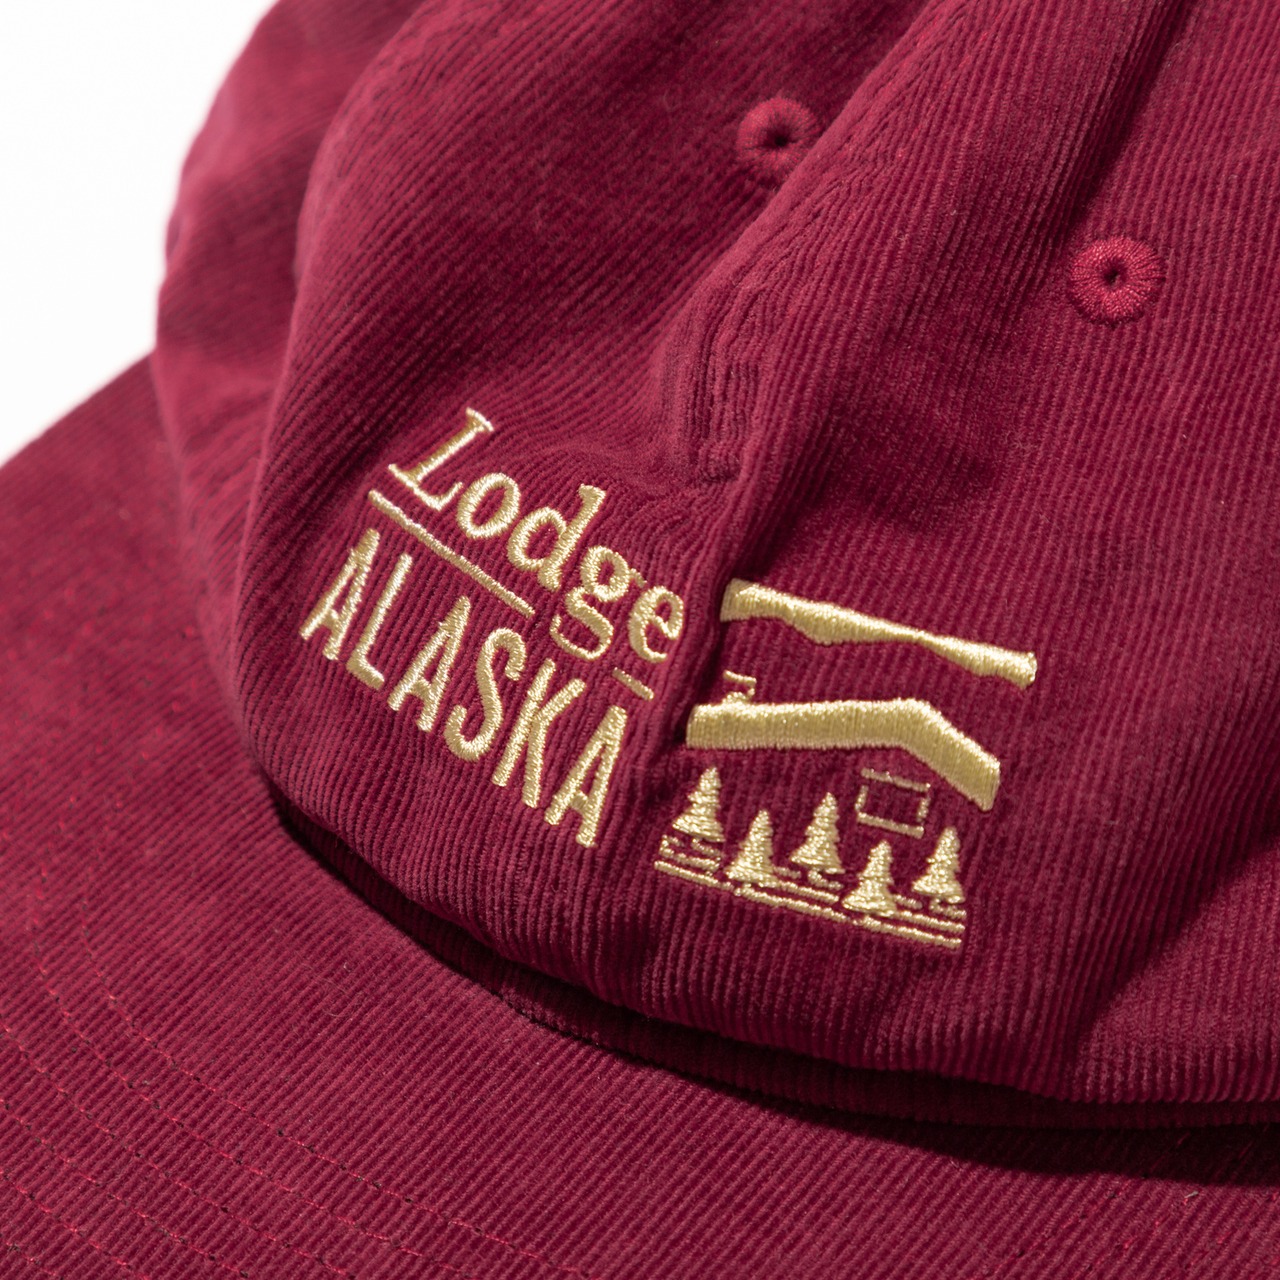 TACOMA  FUJI RECORDS / Lodge ALASKA LOGO CAP ’23 Designed by Hiroshi Iguchi